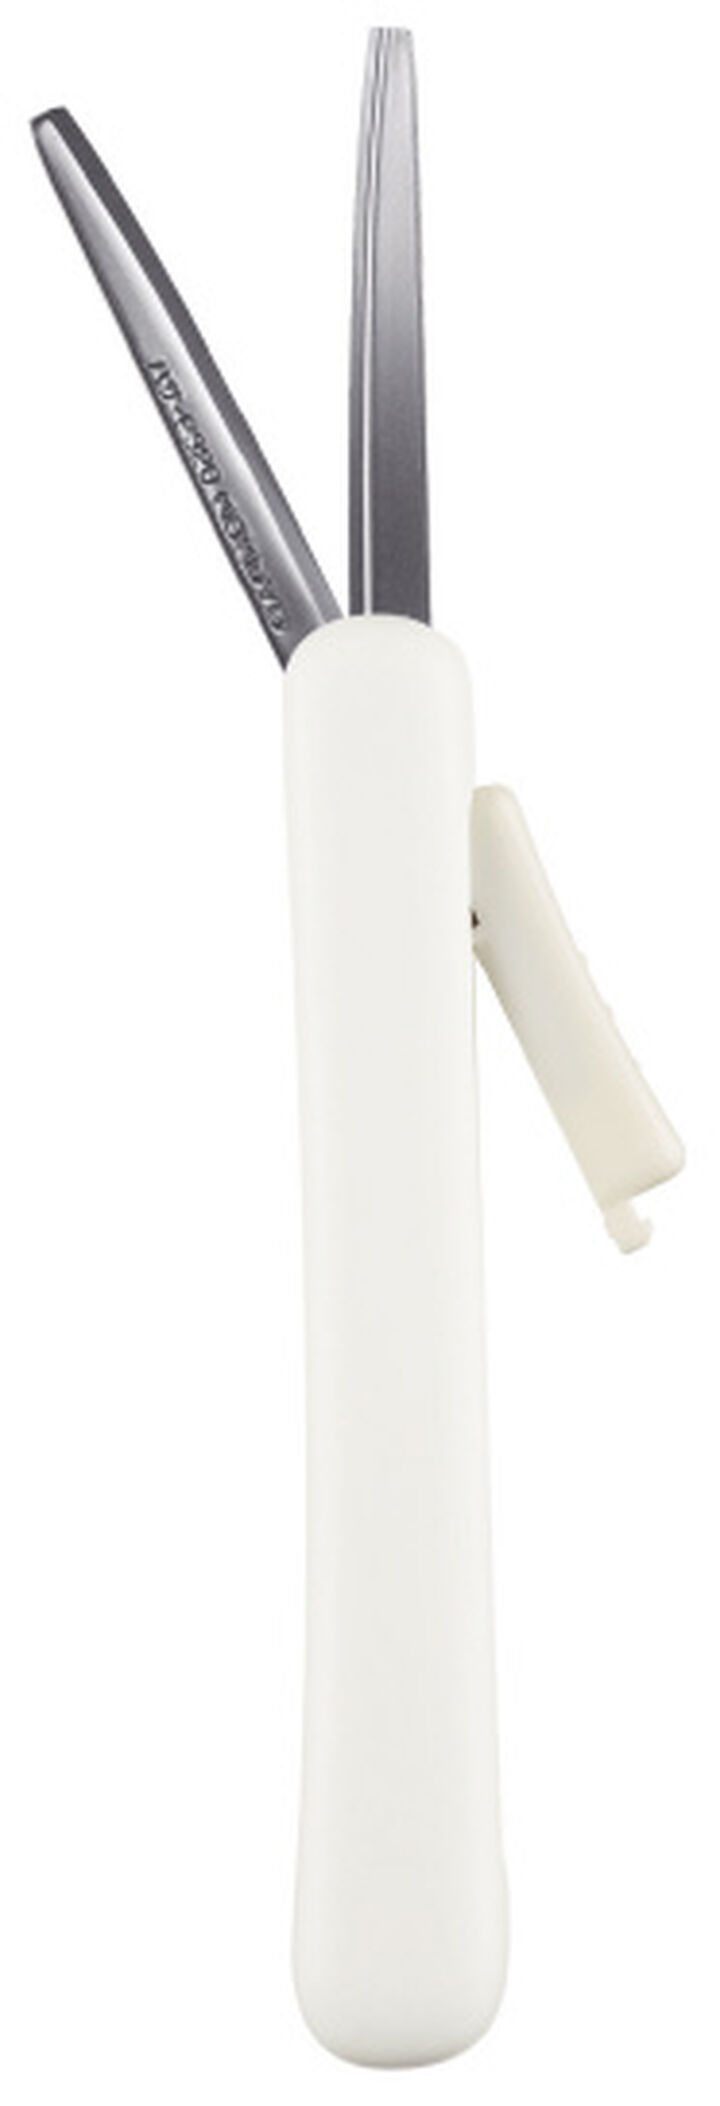 SAXA poche compact scissors White,White, medium image number 2